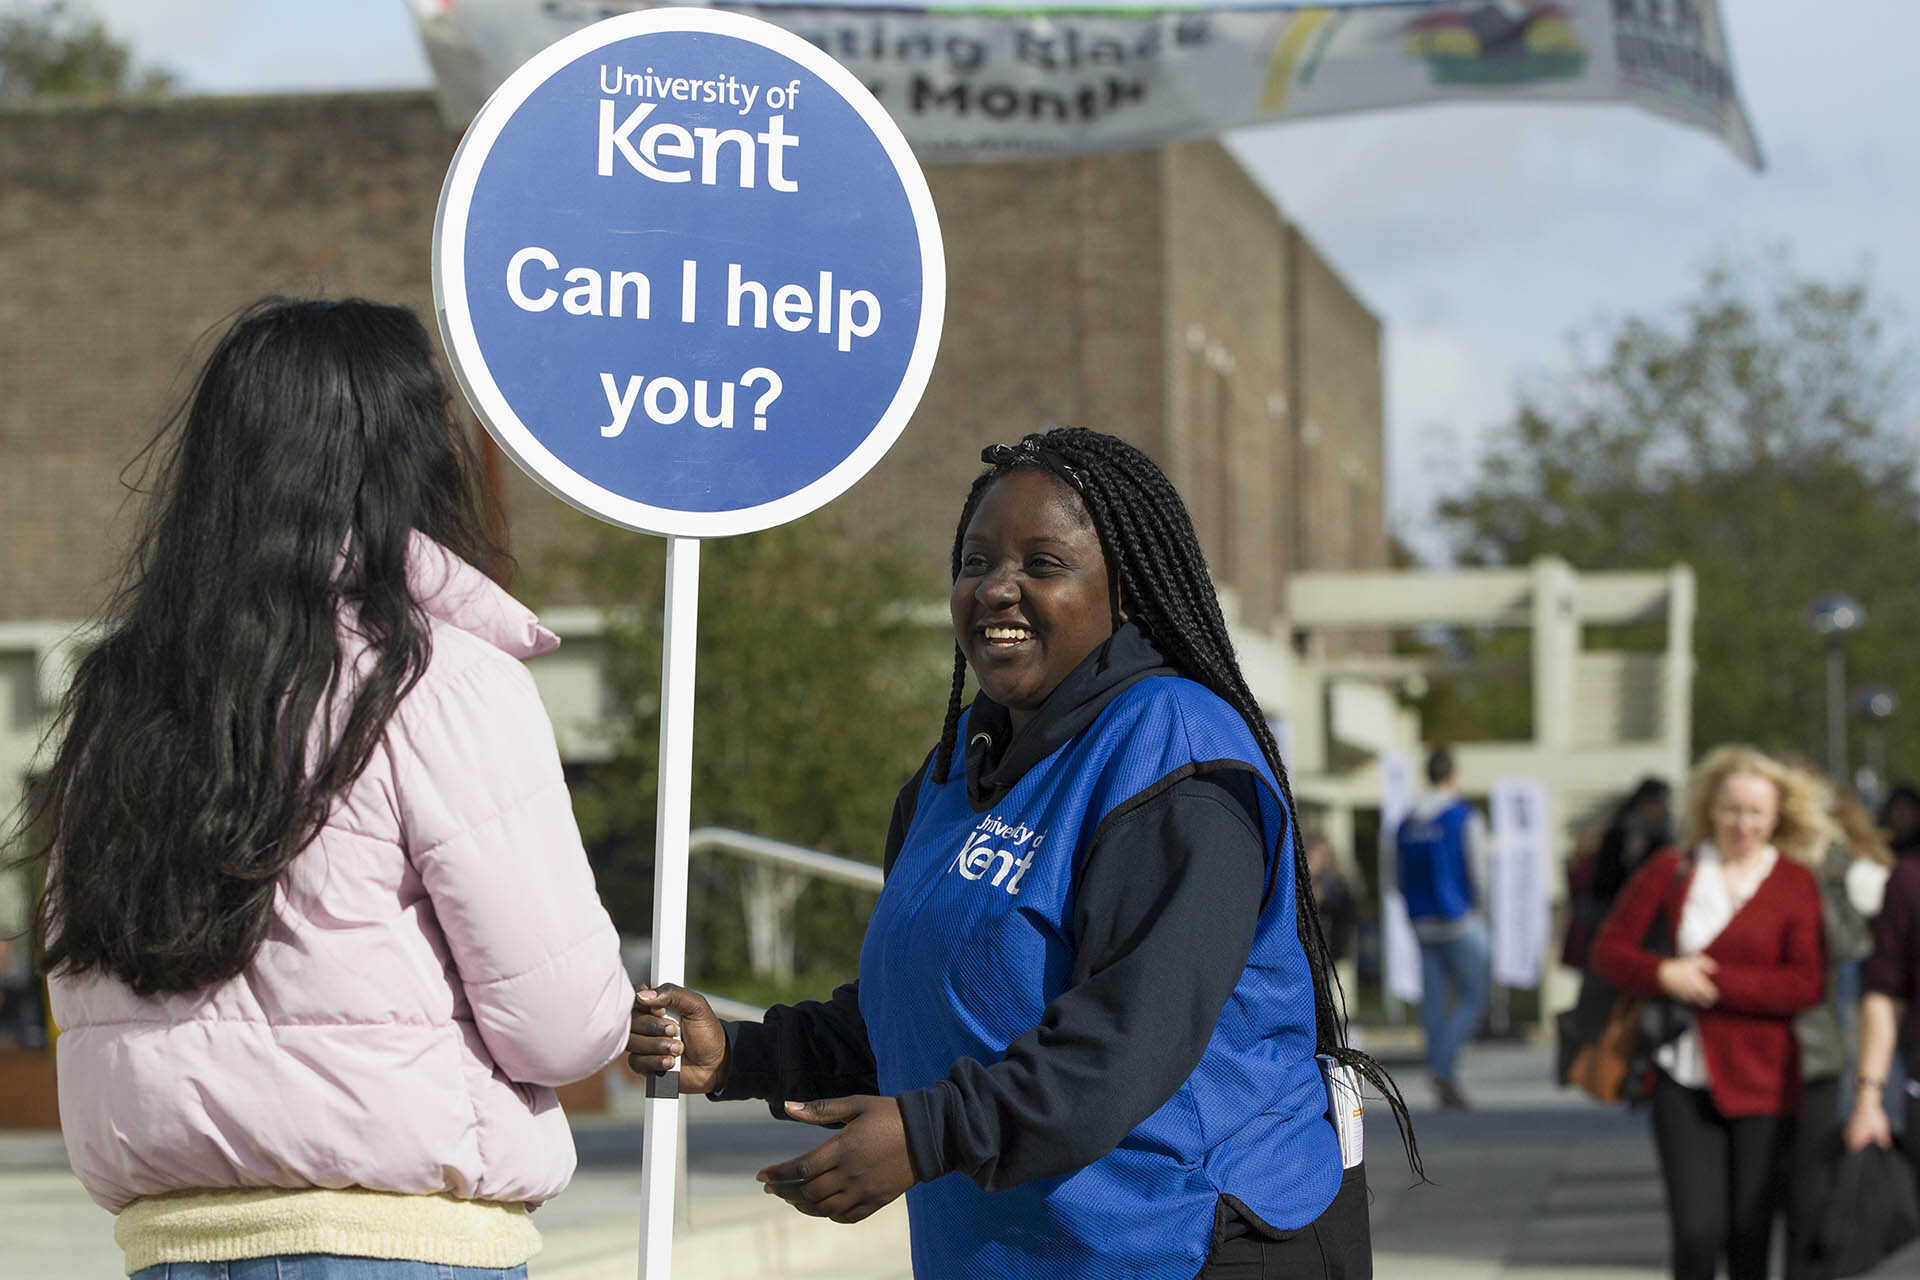 A smiling student ambassador holding a Can I help you? lollipop sign